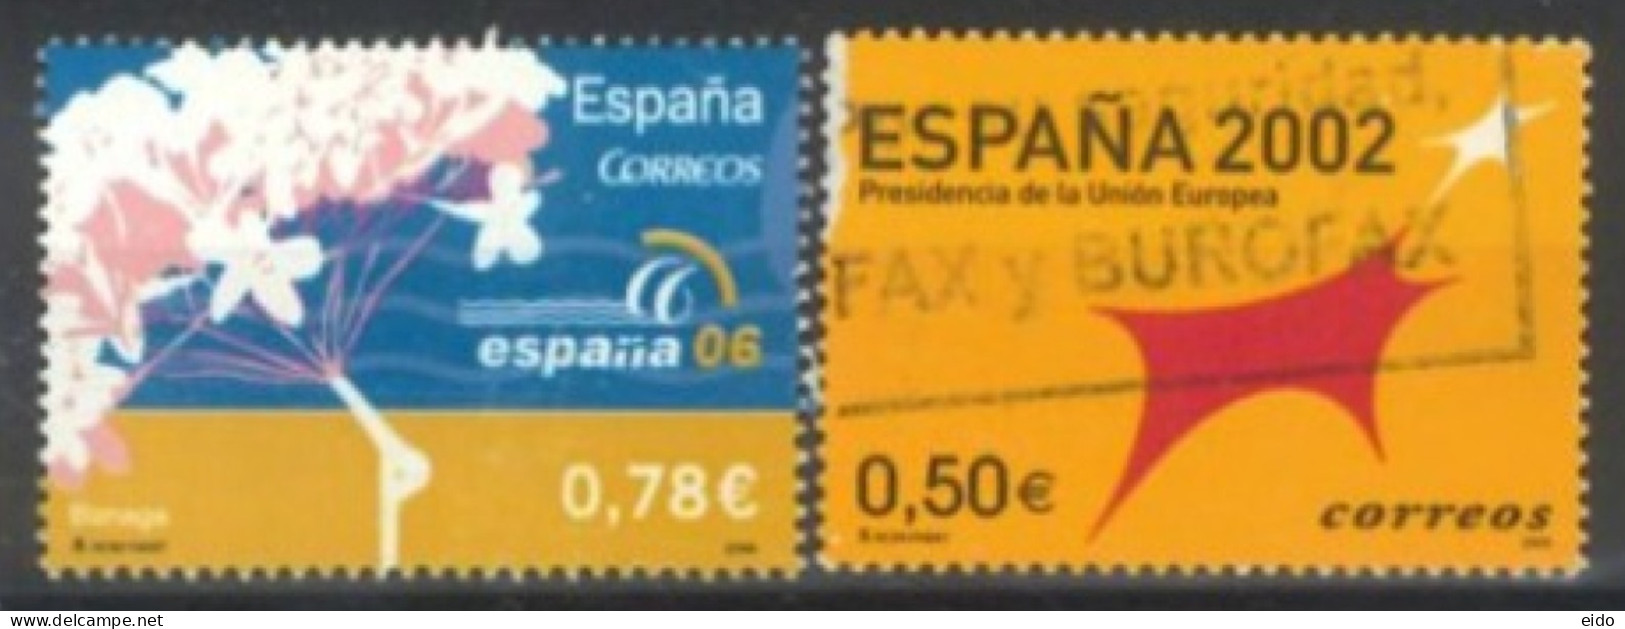 SPAIN, 2002/2006, ESPANA 2006 & 2002 STAMPS SET OF 2, USED. - Usati